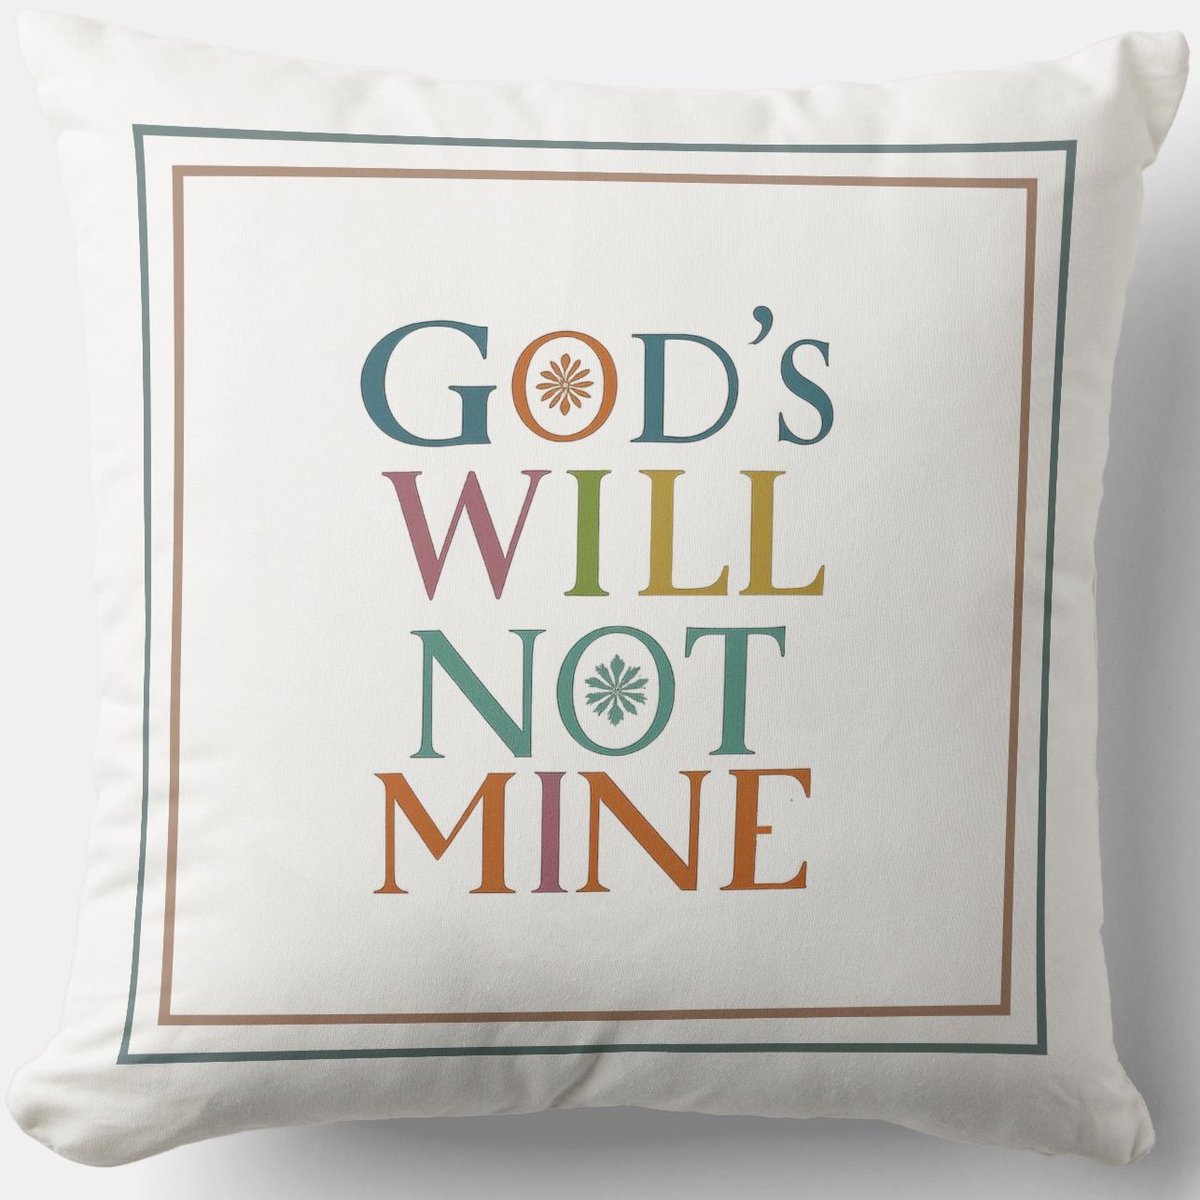 God's Will Not Mine #Cushion Motivation zazzle.com/gods_will_not_… New Throw #Pillow #Blessing #JesusChrist #JesusSaves #Jesus #christian #spiritual #Homedecoration #uniquegift #giftideas #MothersDayGifts #giftformom #giftidea #HolySpirit #pillows #giftshop #giftsforher #giftsformom